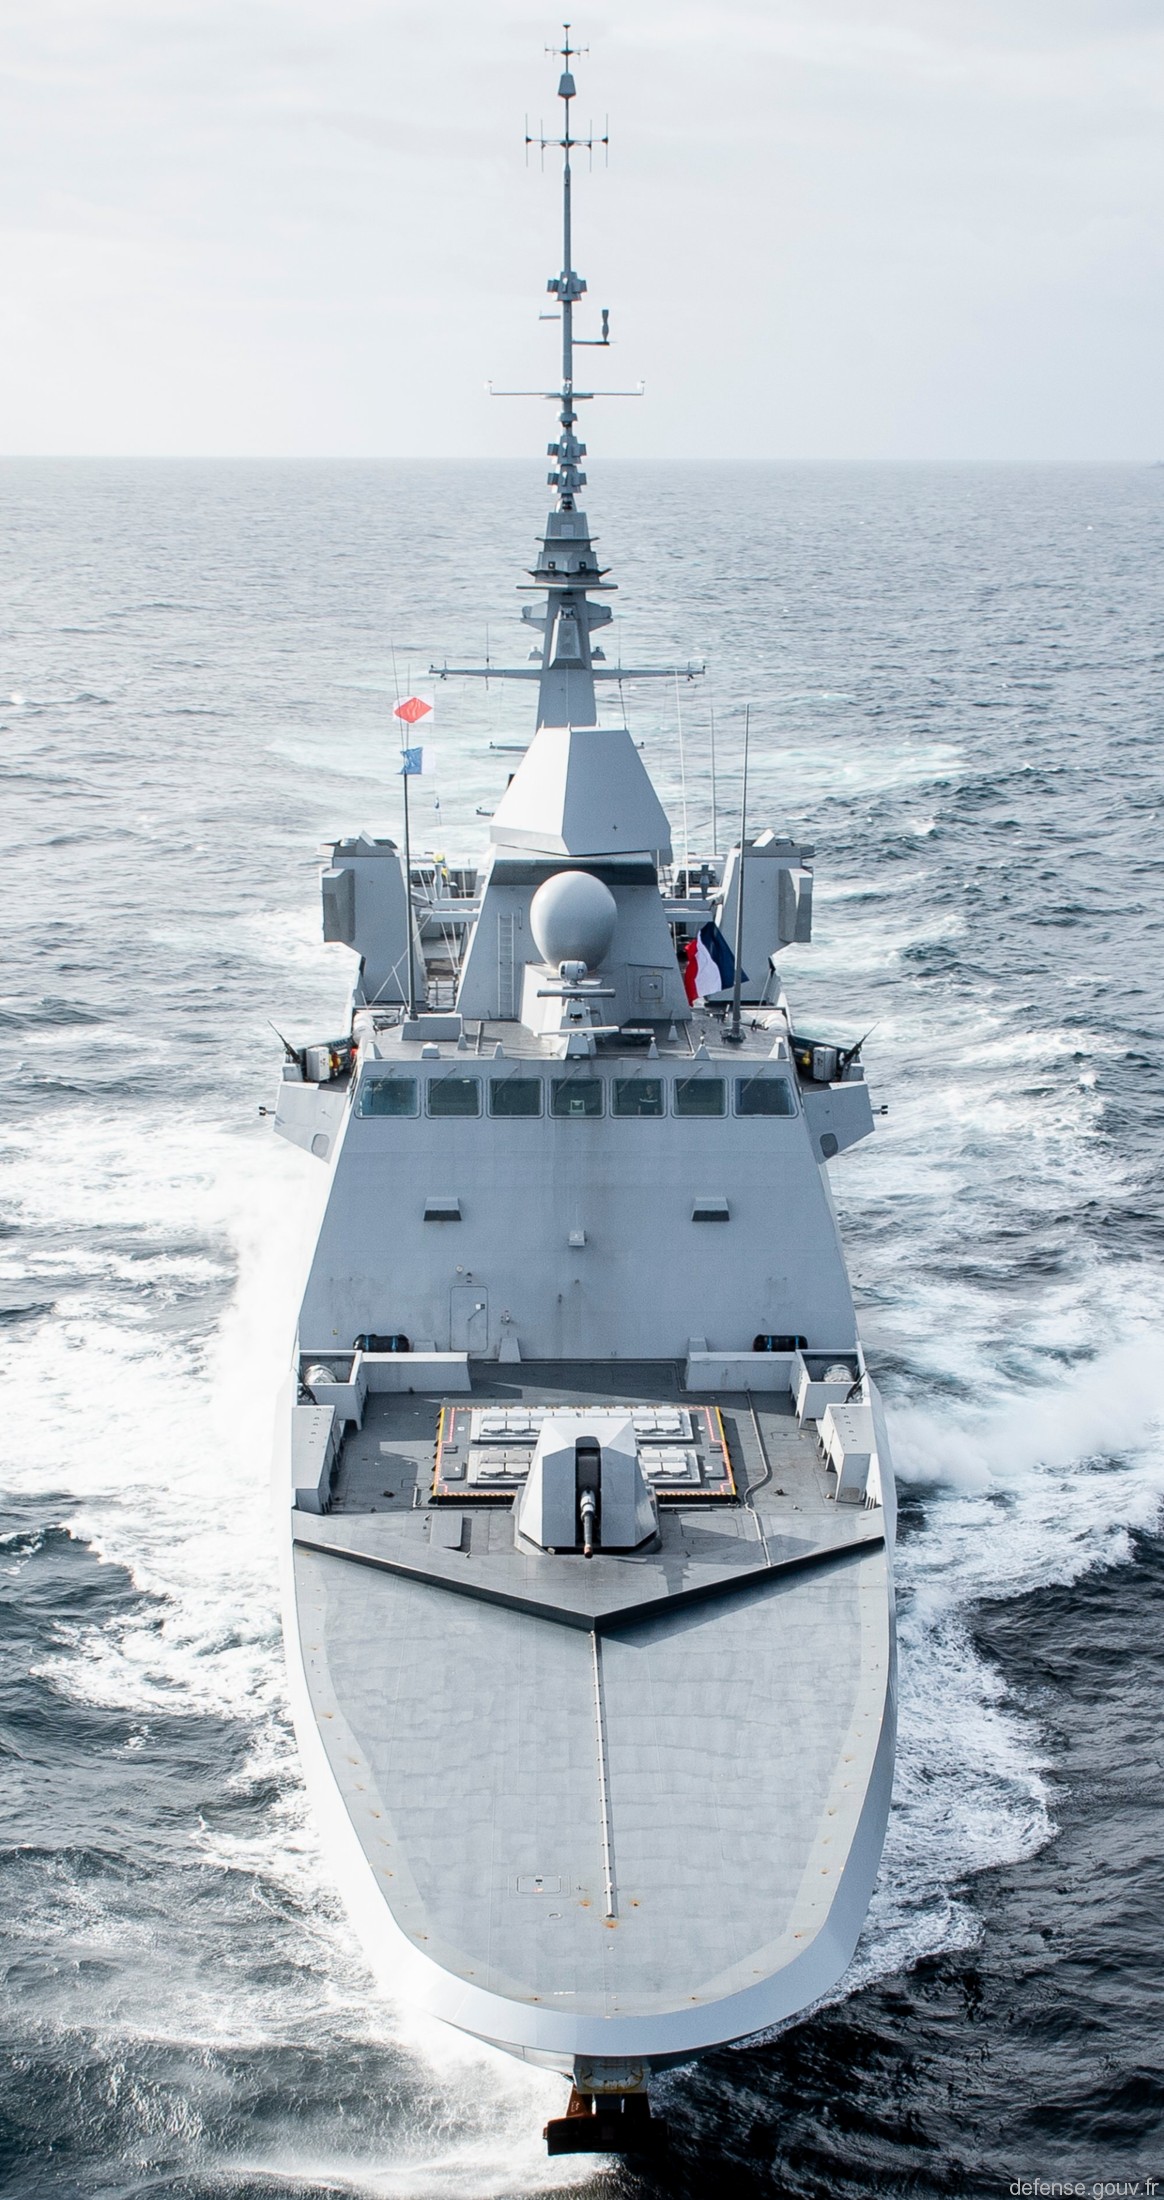 d-651 fs normandie fremm aquitaine class frigate fregate multi purpose french navy marine nationale 19